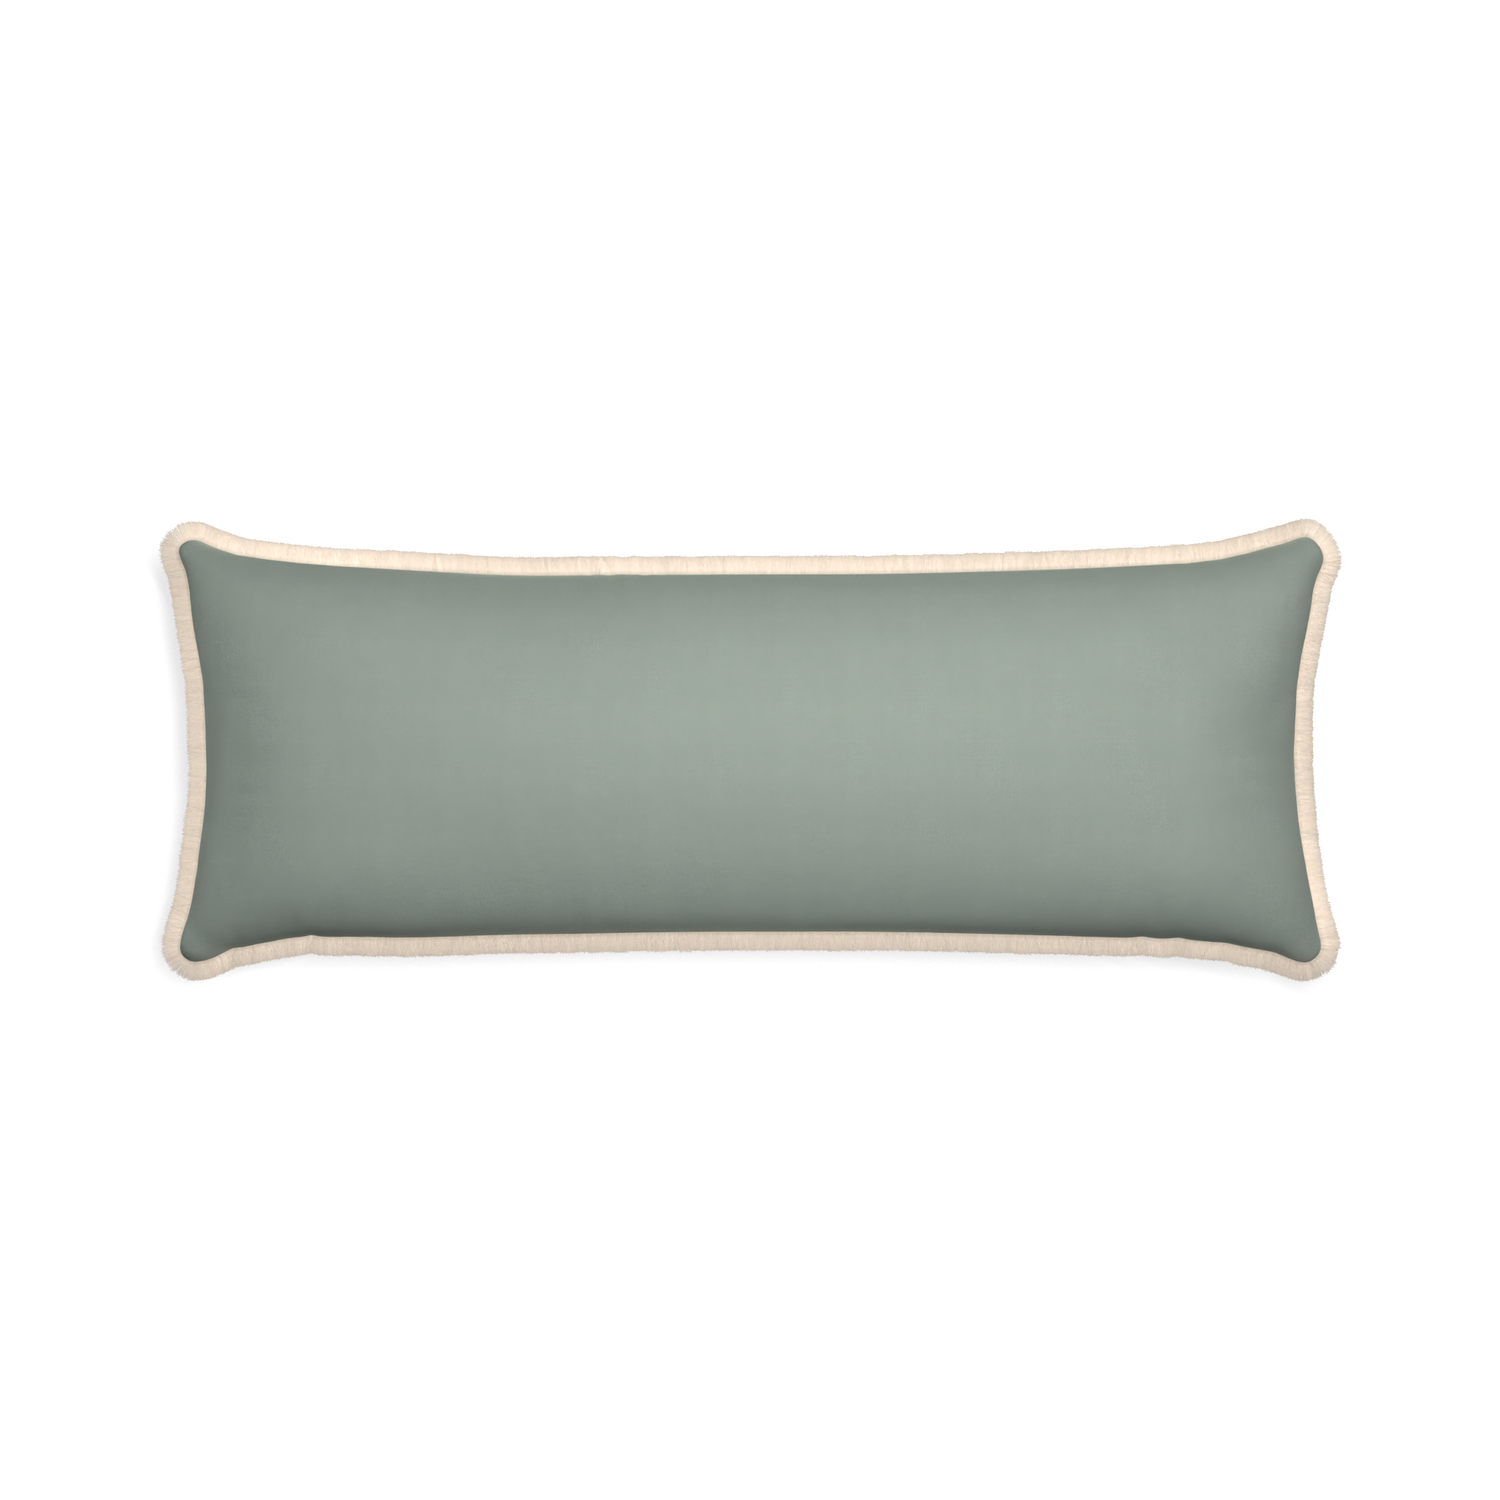 Xl-lumbar sage custom pillow with cream fringe on white background